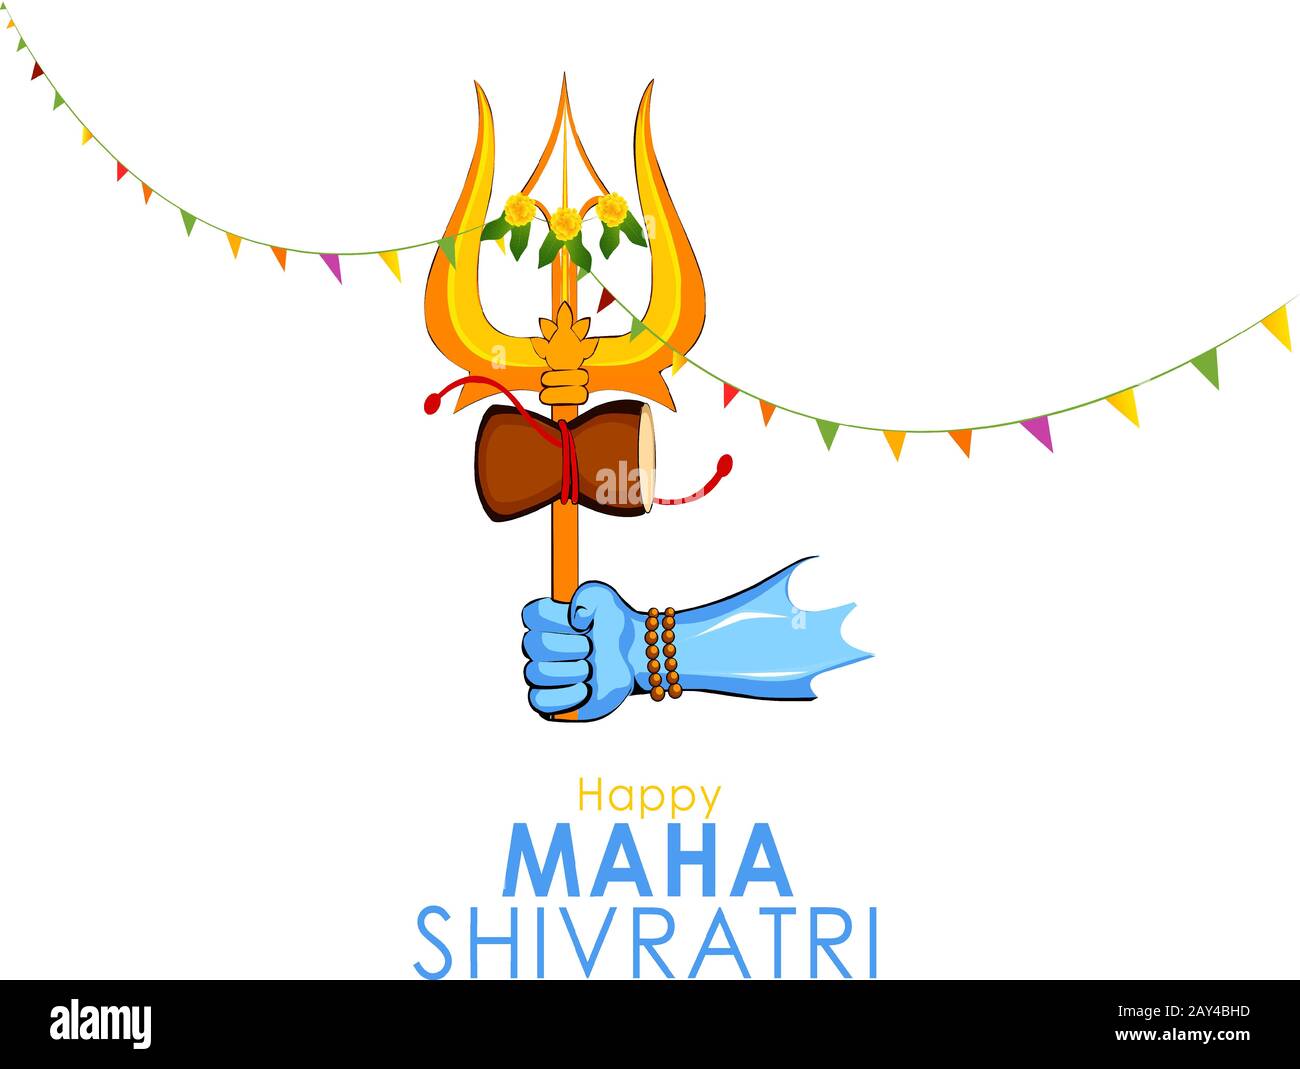 Illustration Of Happy Maha Shivratri Greeting Card Designs Stock Vector  Image & Art - Alamy